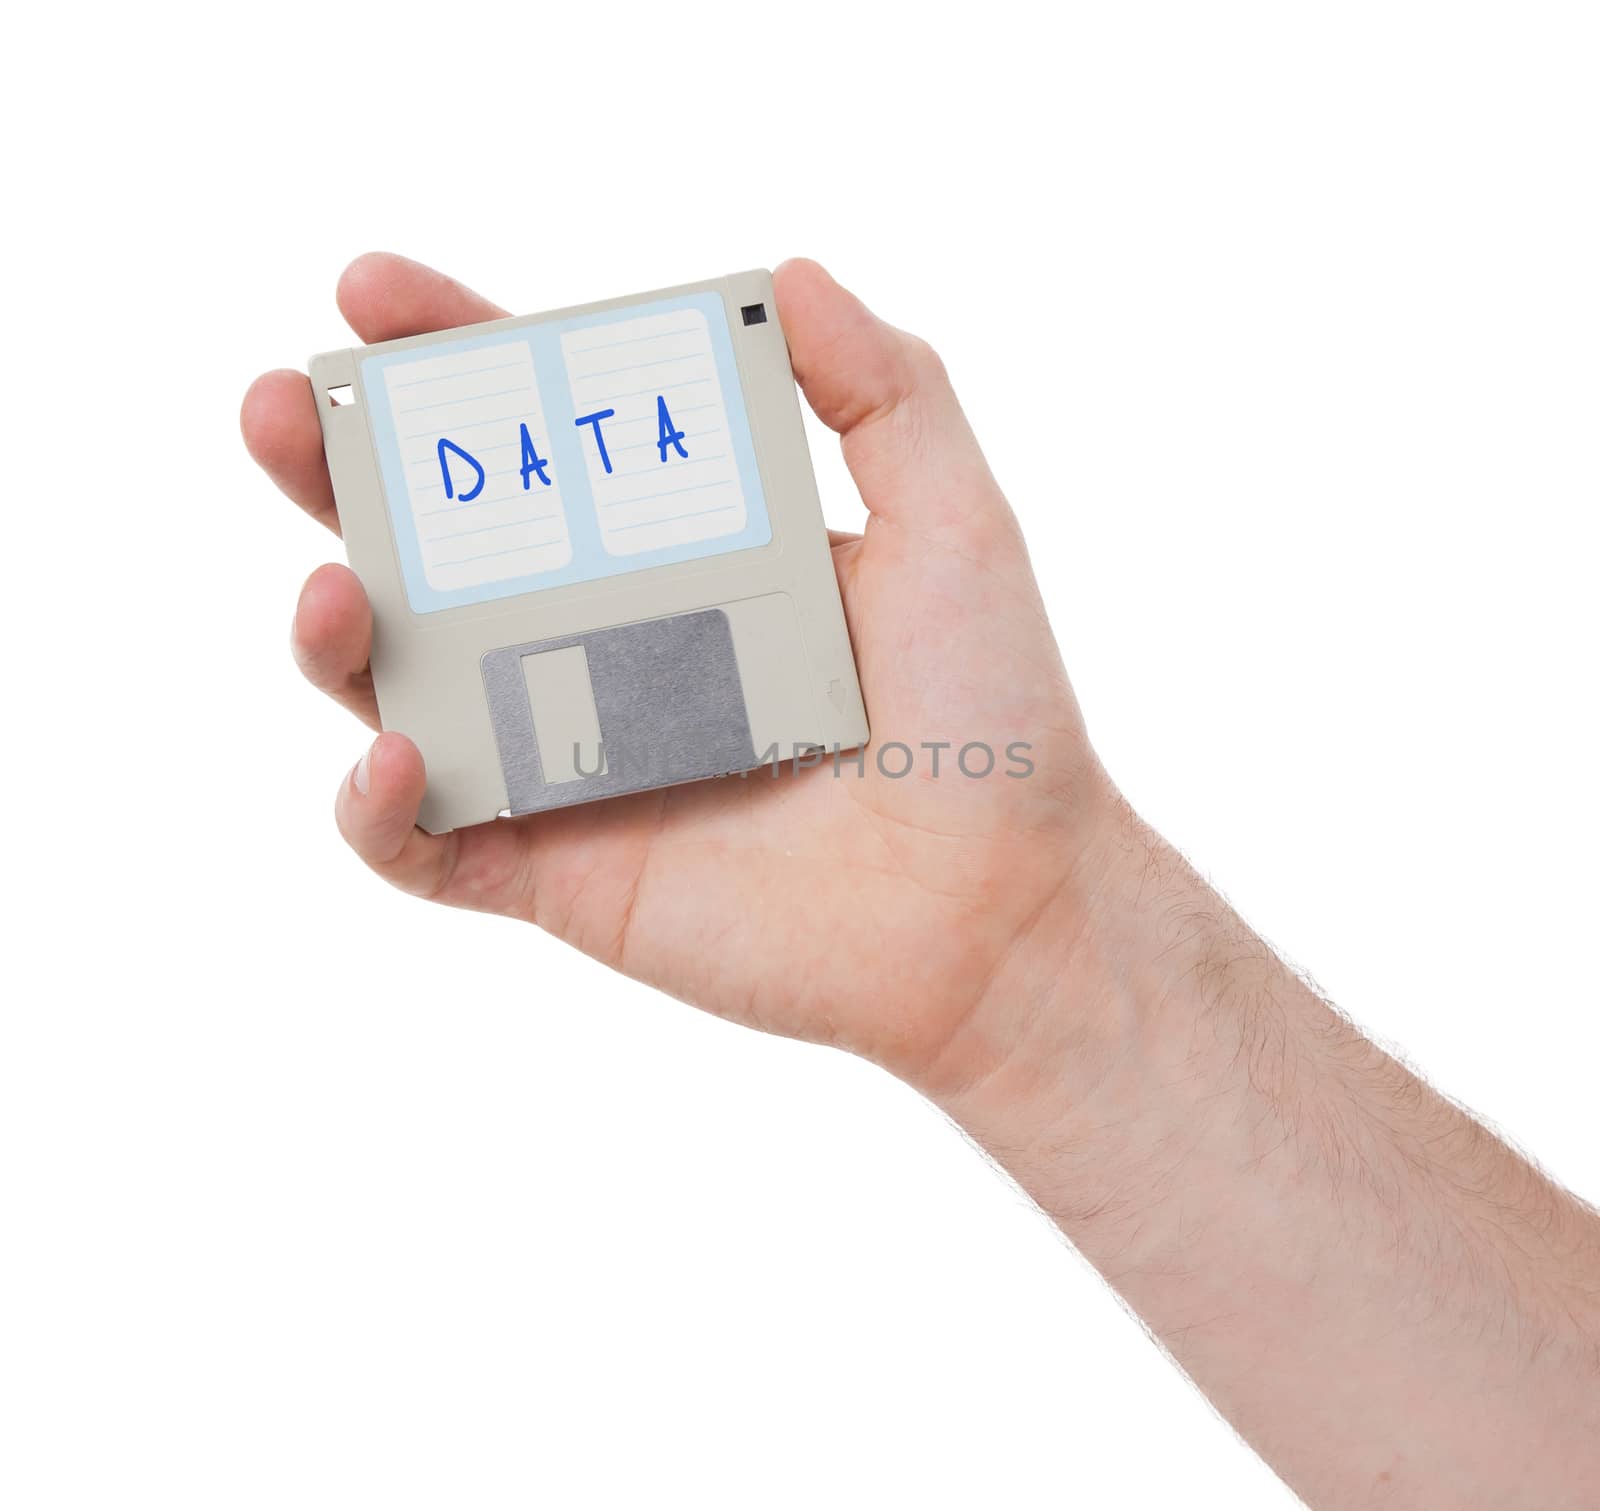 Floppy disk, data storage support, isolated on white - Data